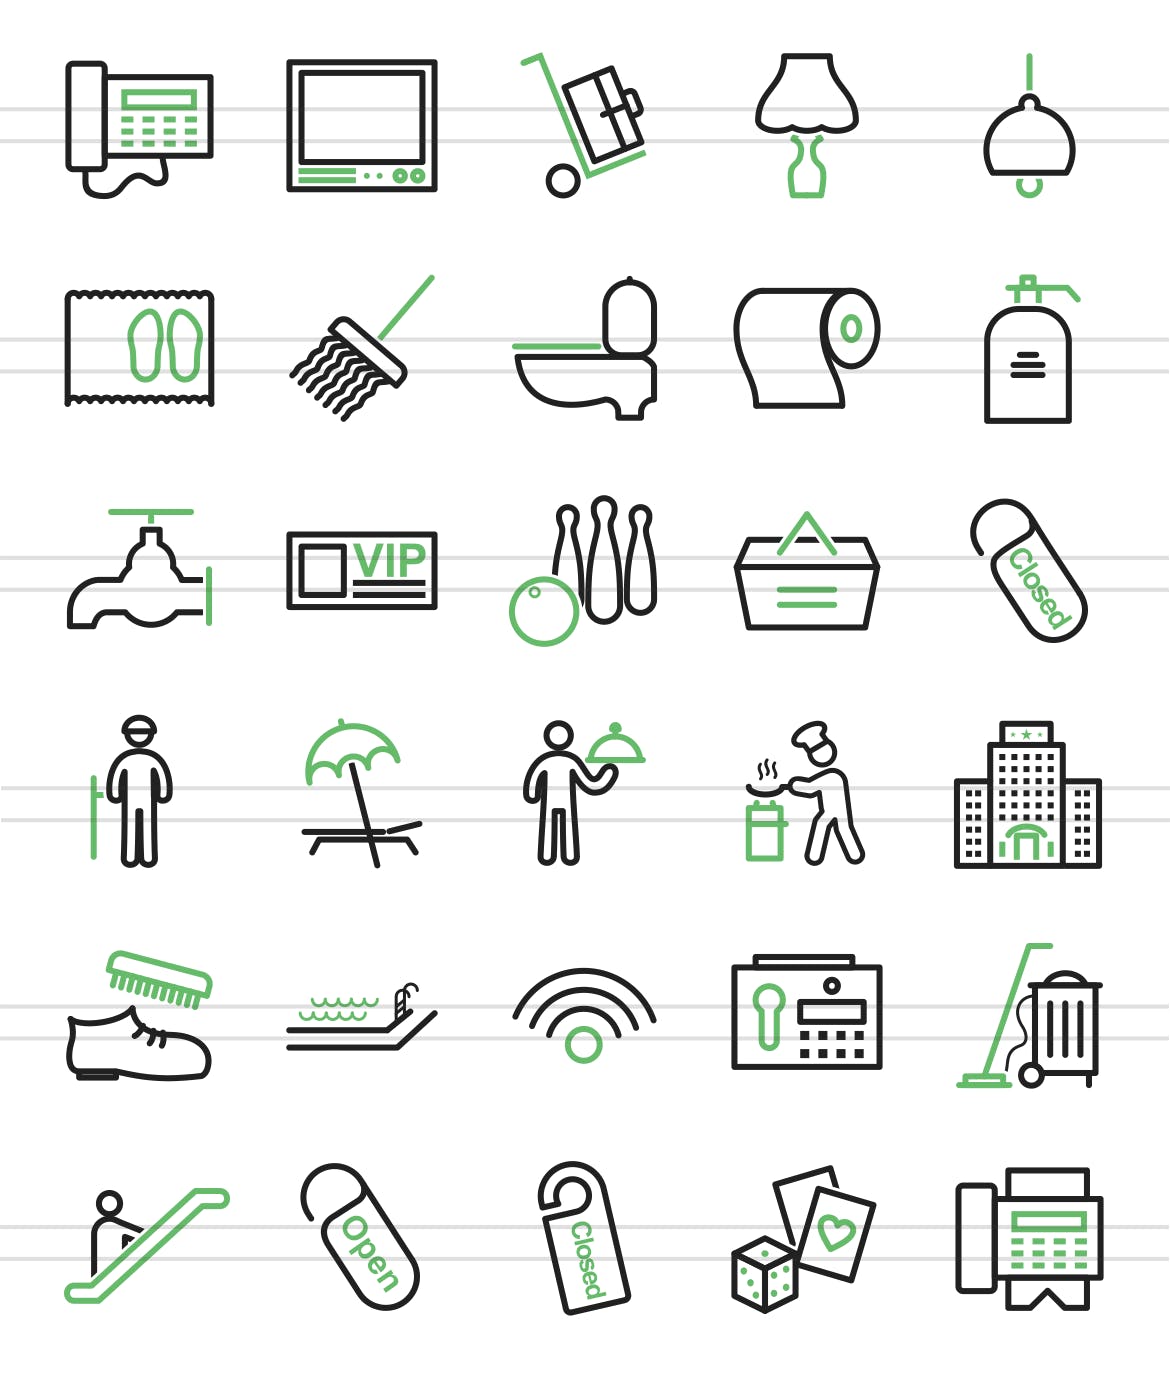 60枚酒店&餐厅线条图标素材 60 Hotel & Restaurant Line Green & Black Icons插图(2)